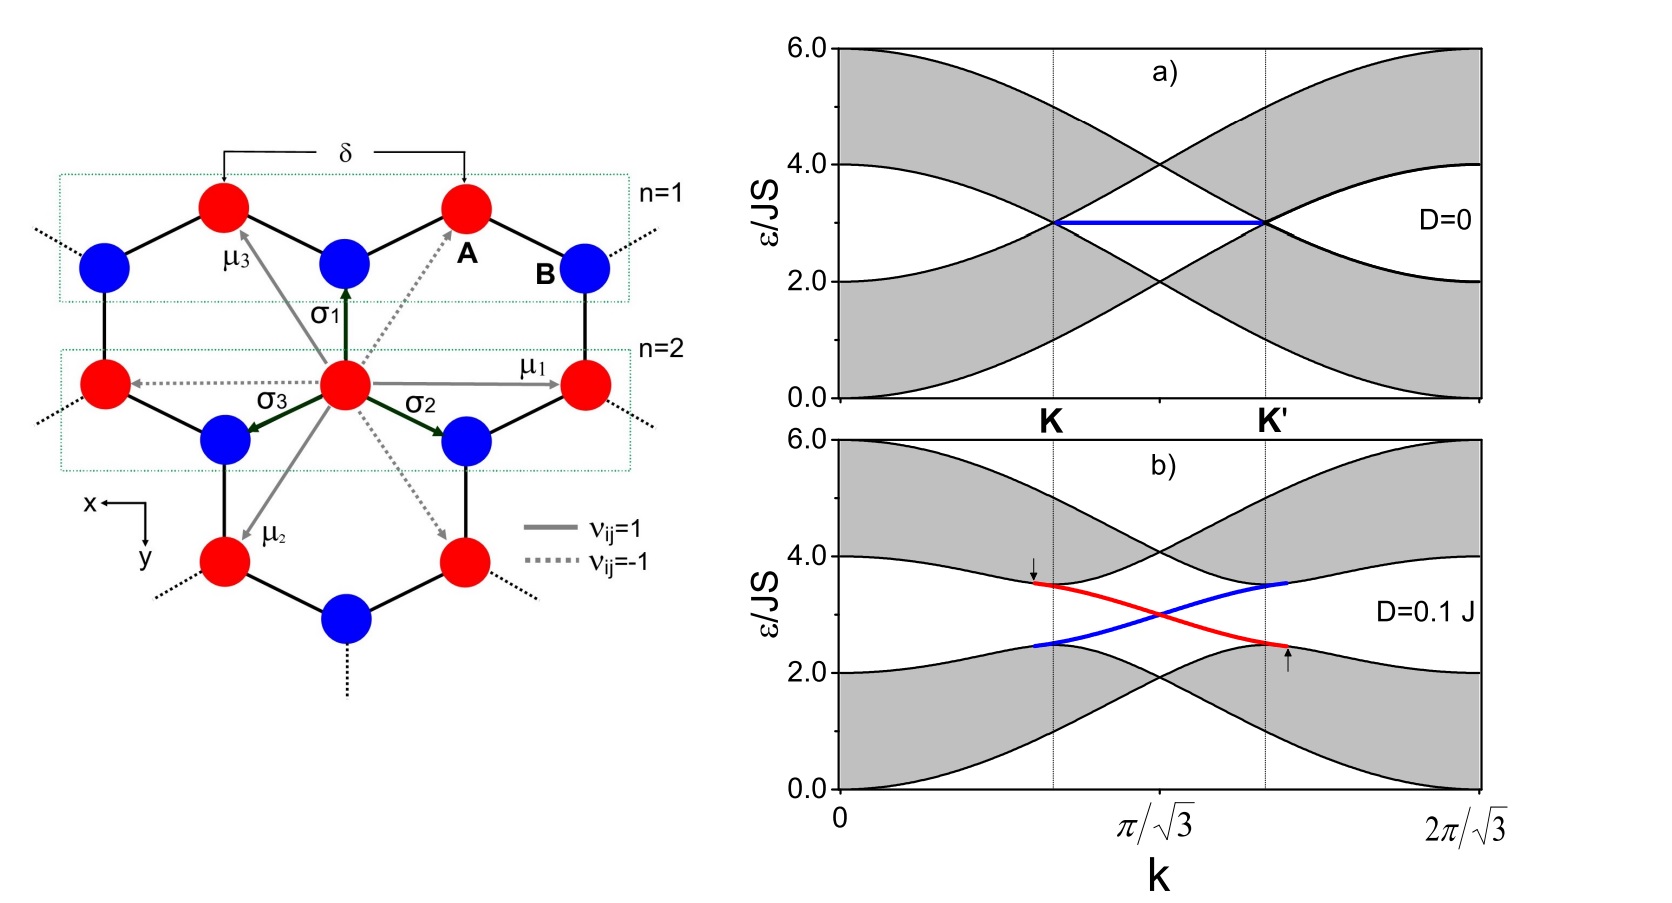 Analytical study of the edge states in the bosonic Haldane model